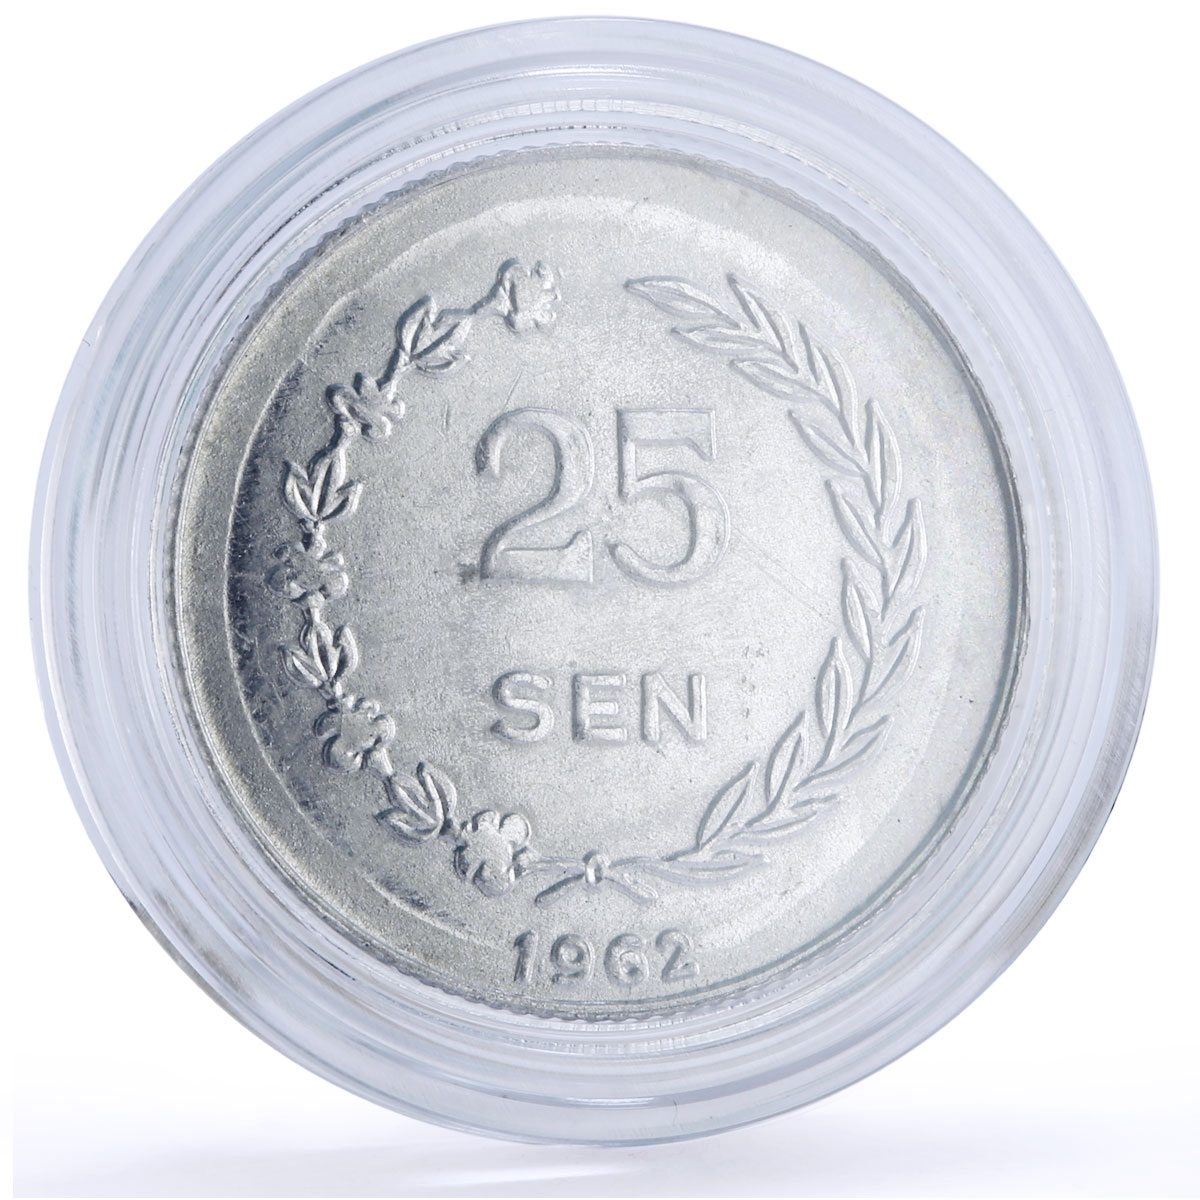 Indonesia Irian Barat 25 sen President Sukarno Politics KM-8.1 Al coin 1962